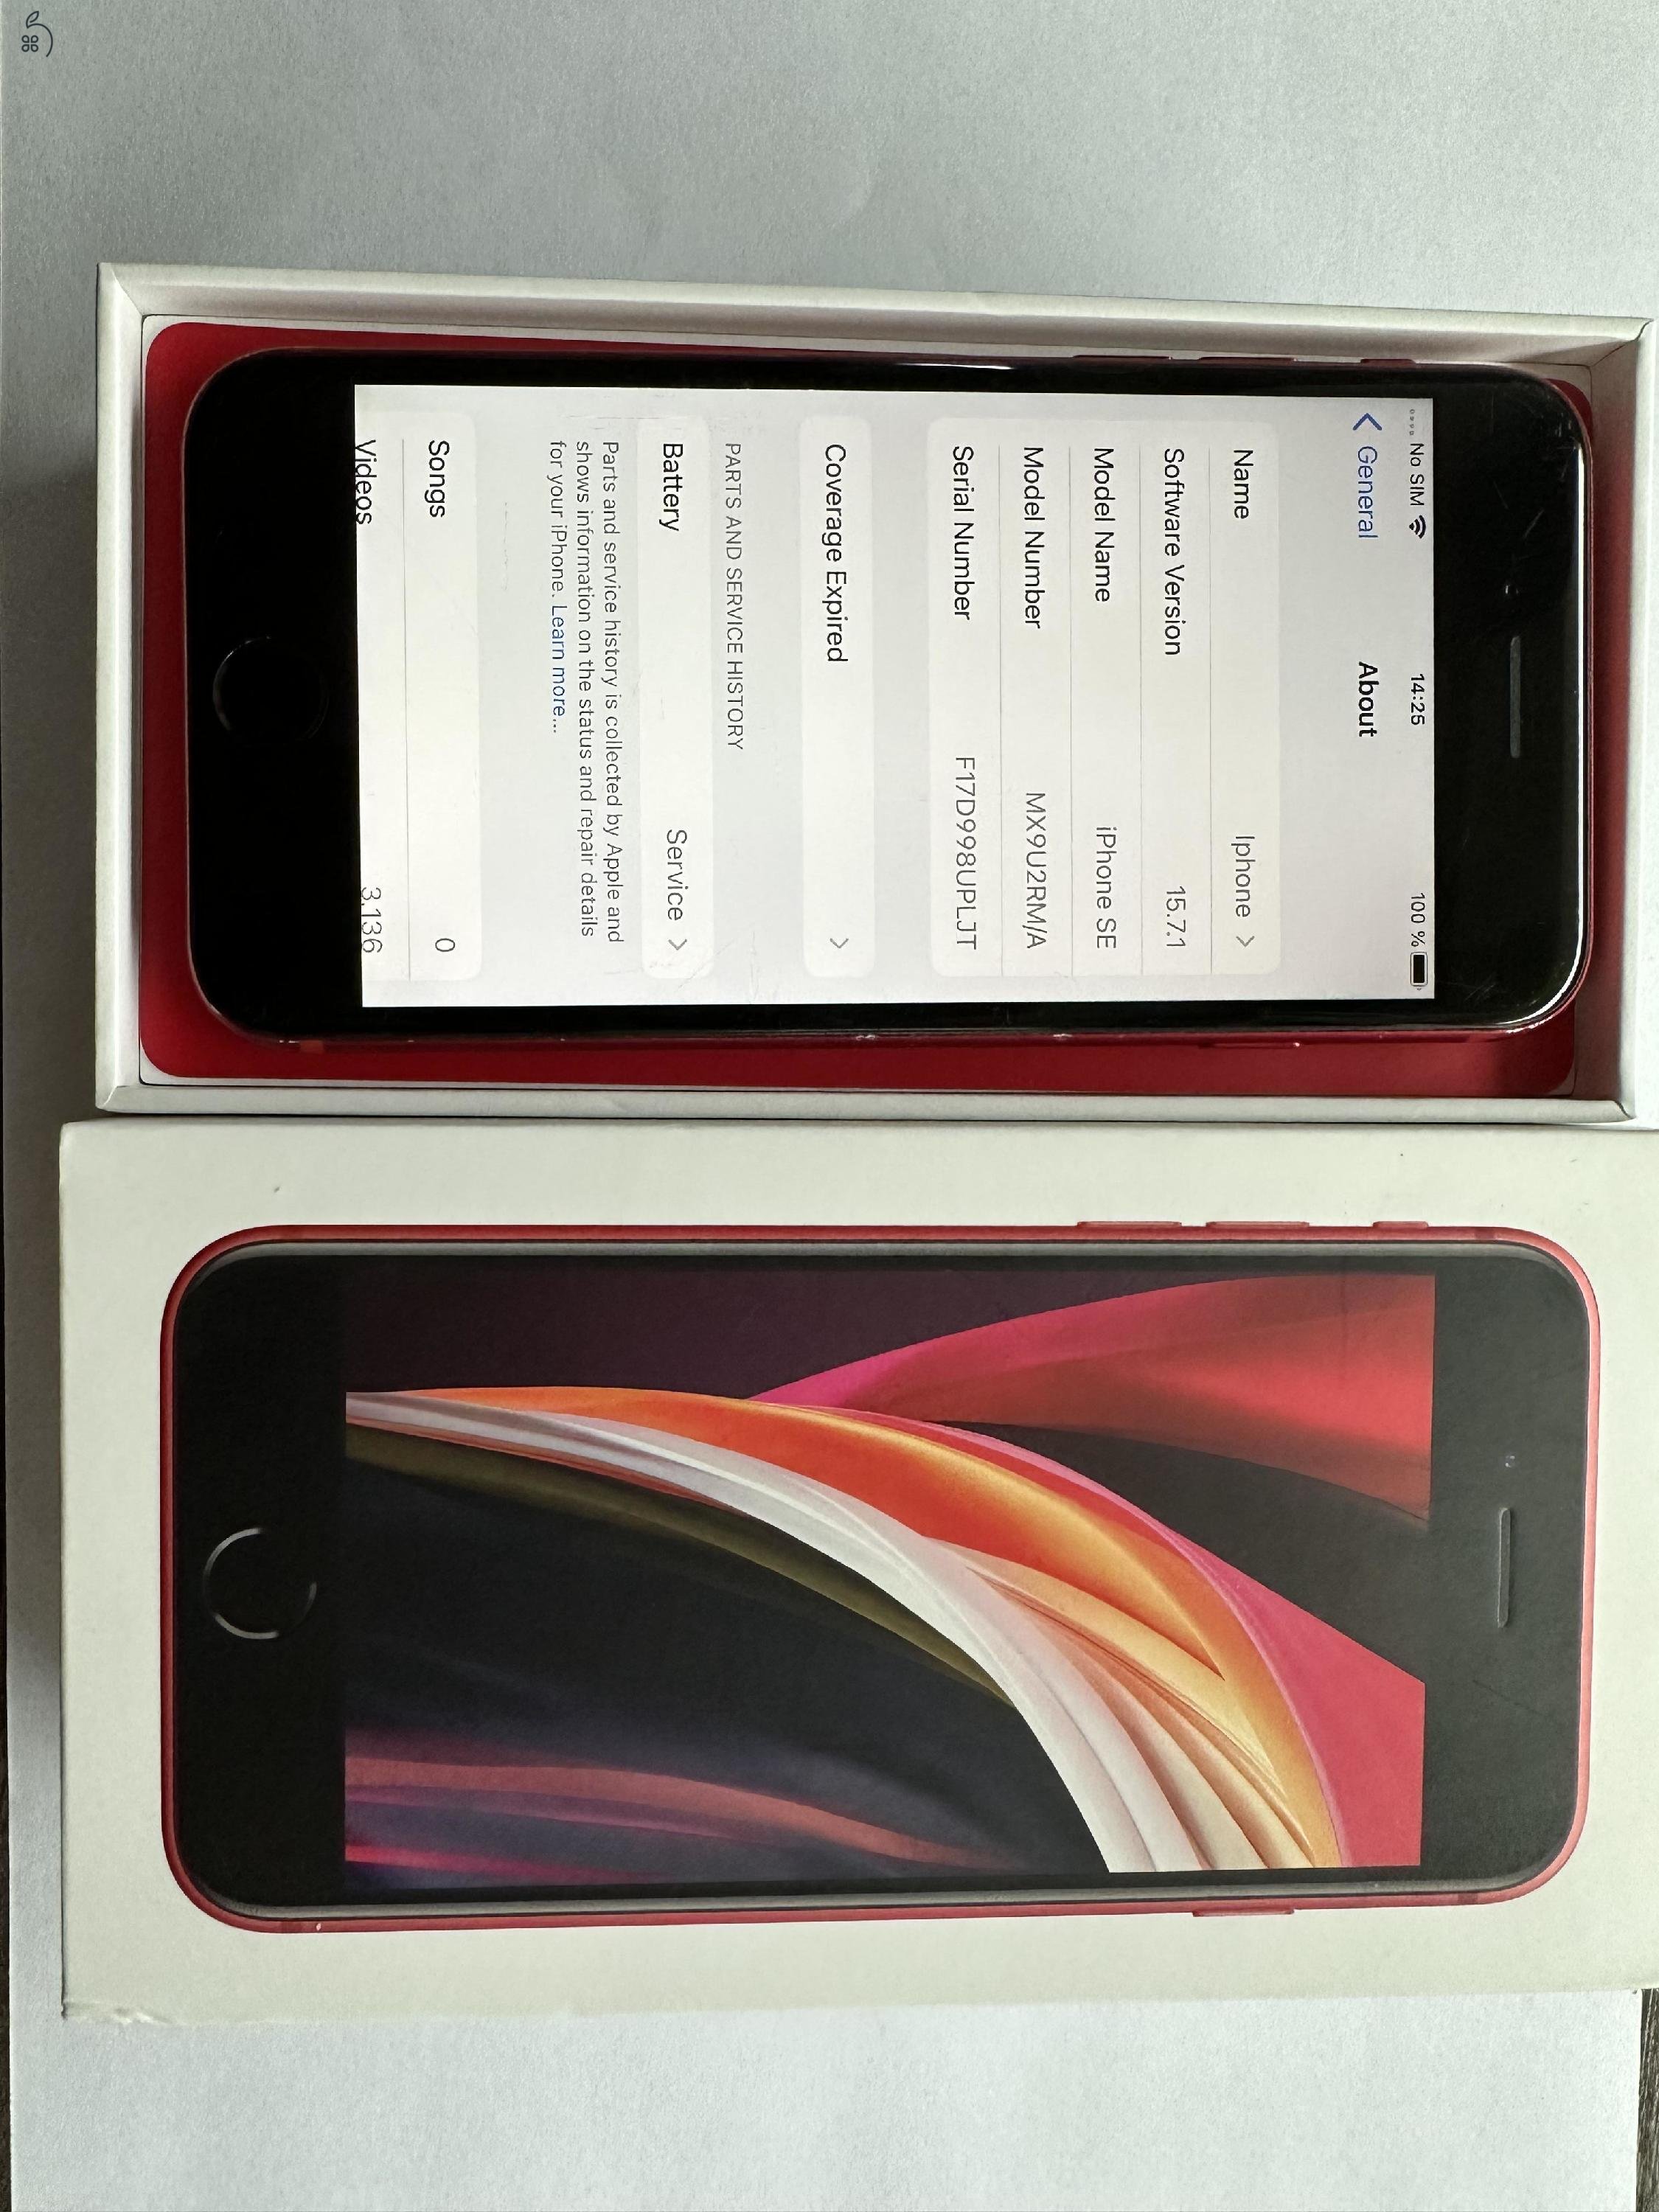 Iphone SE 2020, RED, 64GB